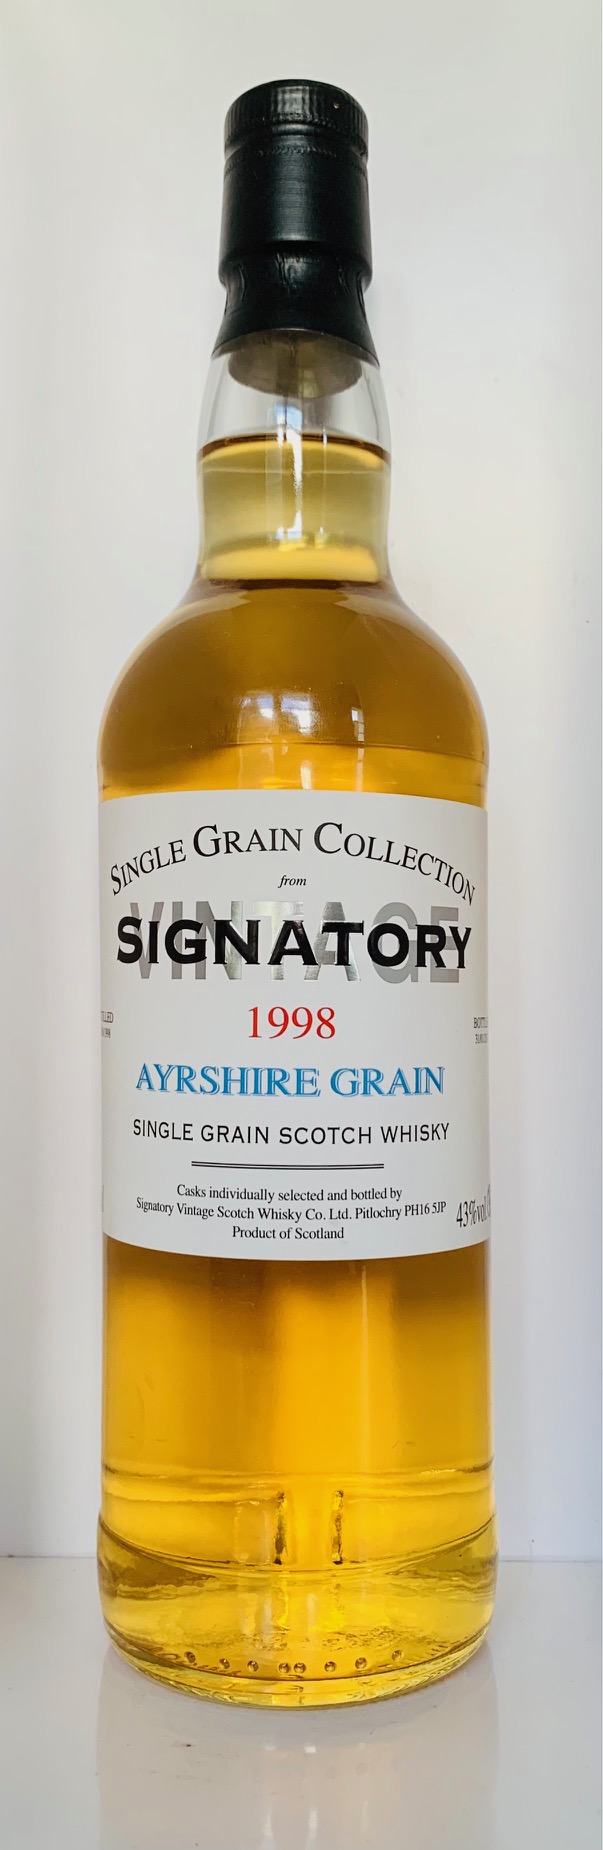 Ayrshire (Girvan)Grain 1998 / 2017 Signatory Single Grain Collection